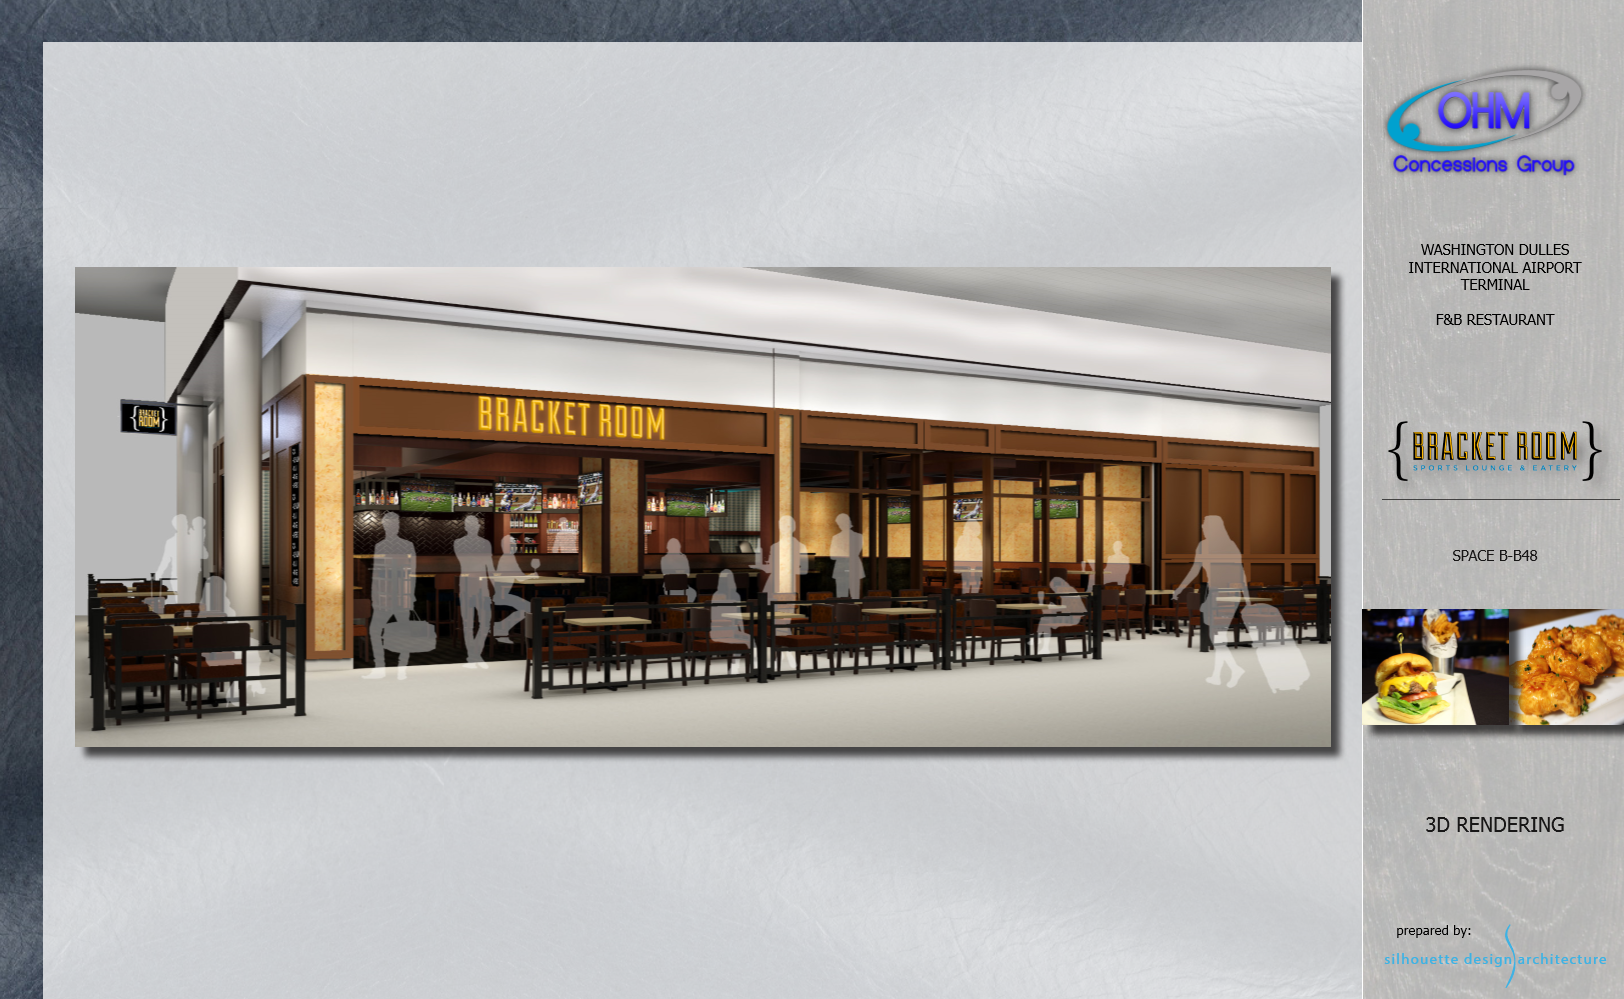 {Bracket Room}'s Washington Dulles International Airport Location's 3D Rendering